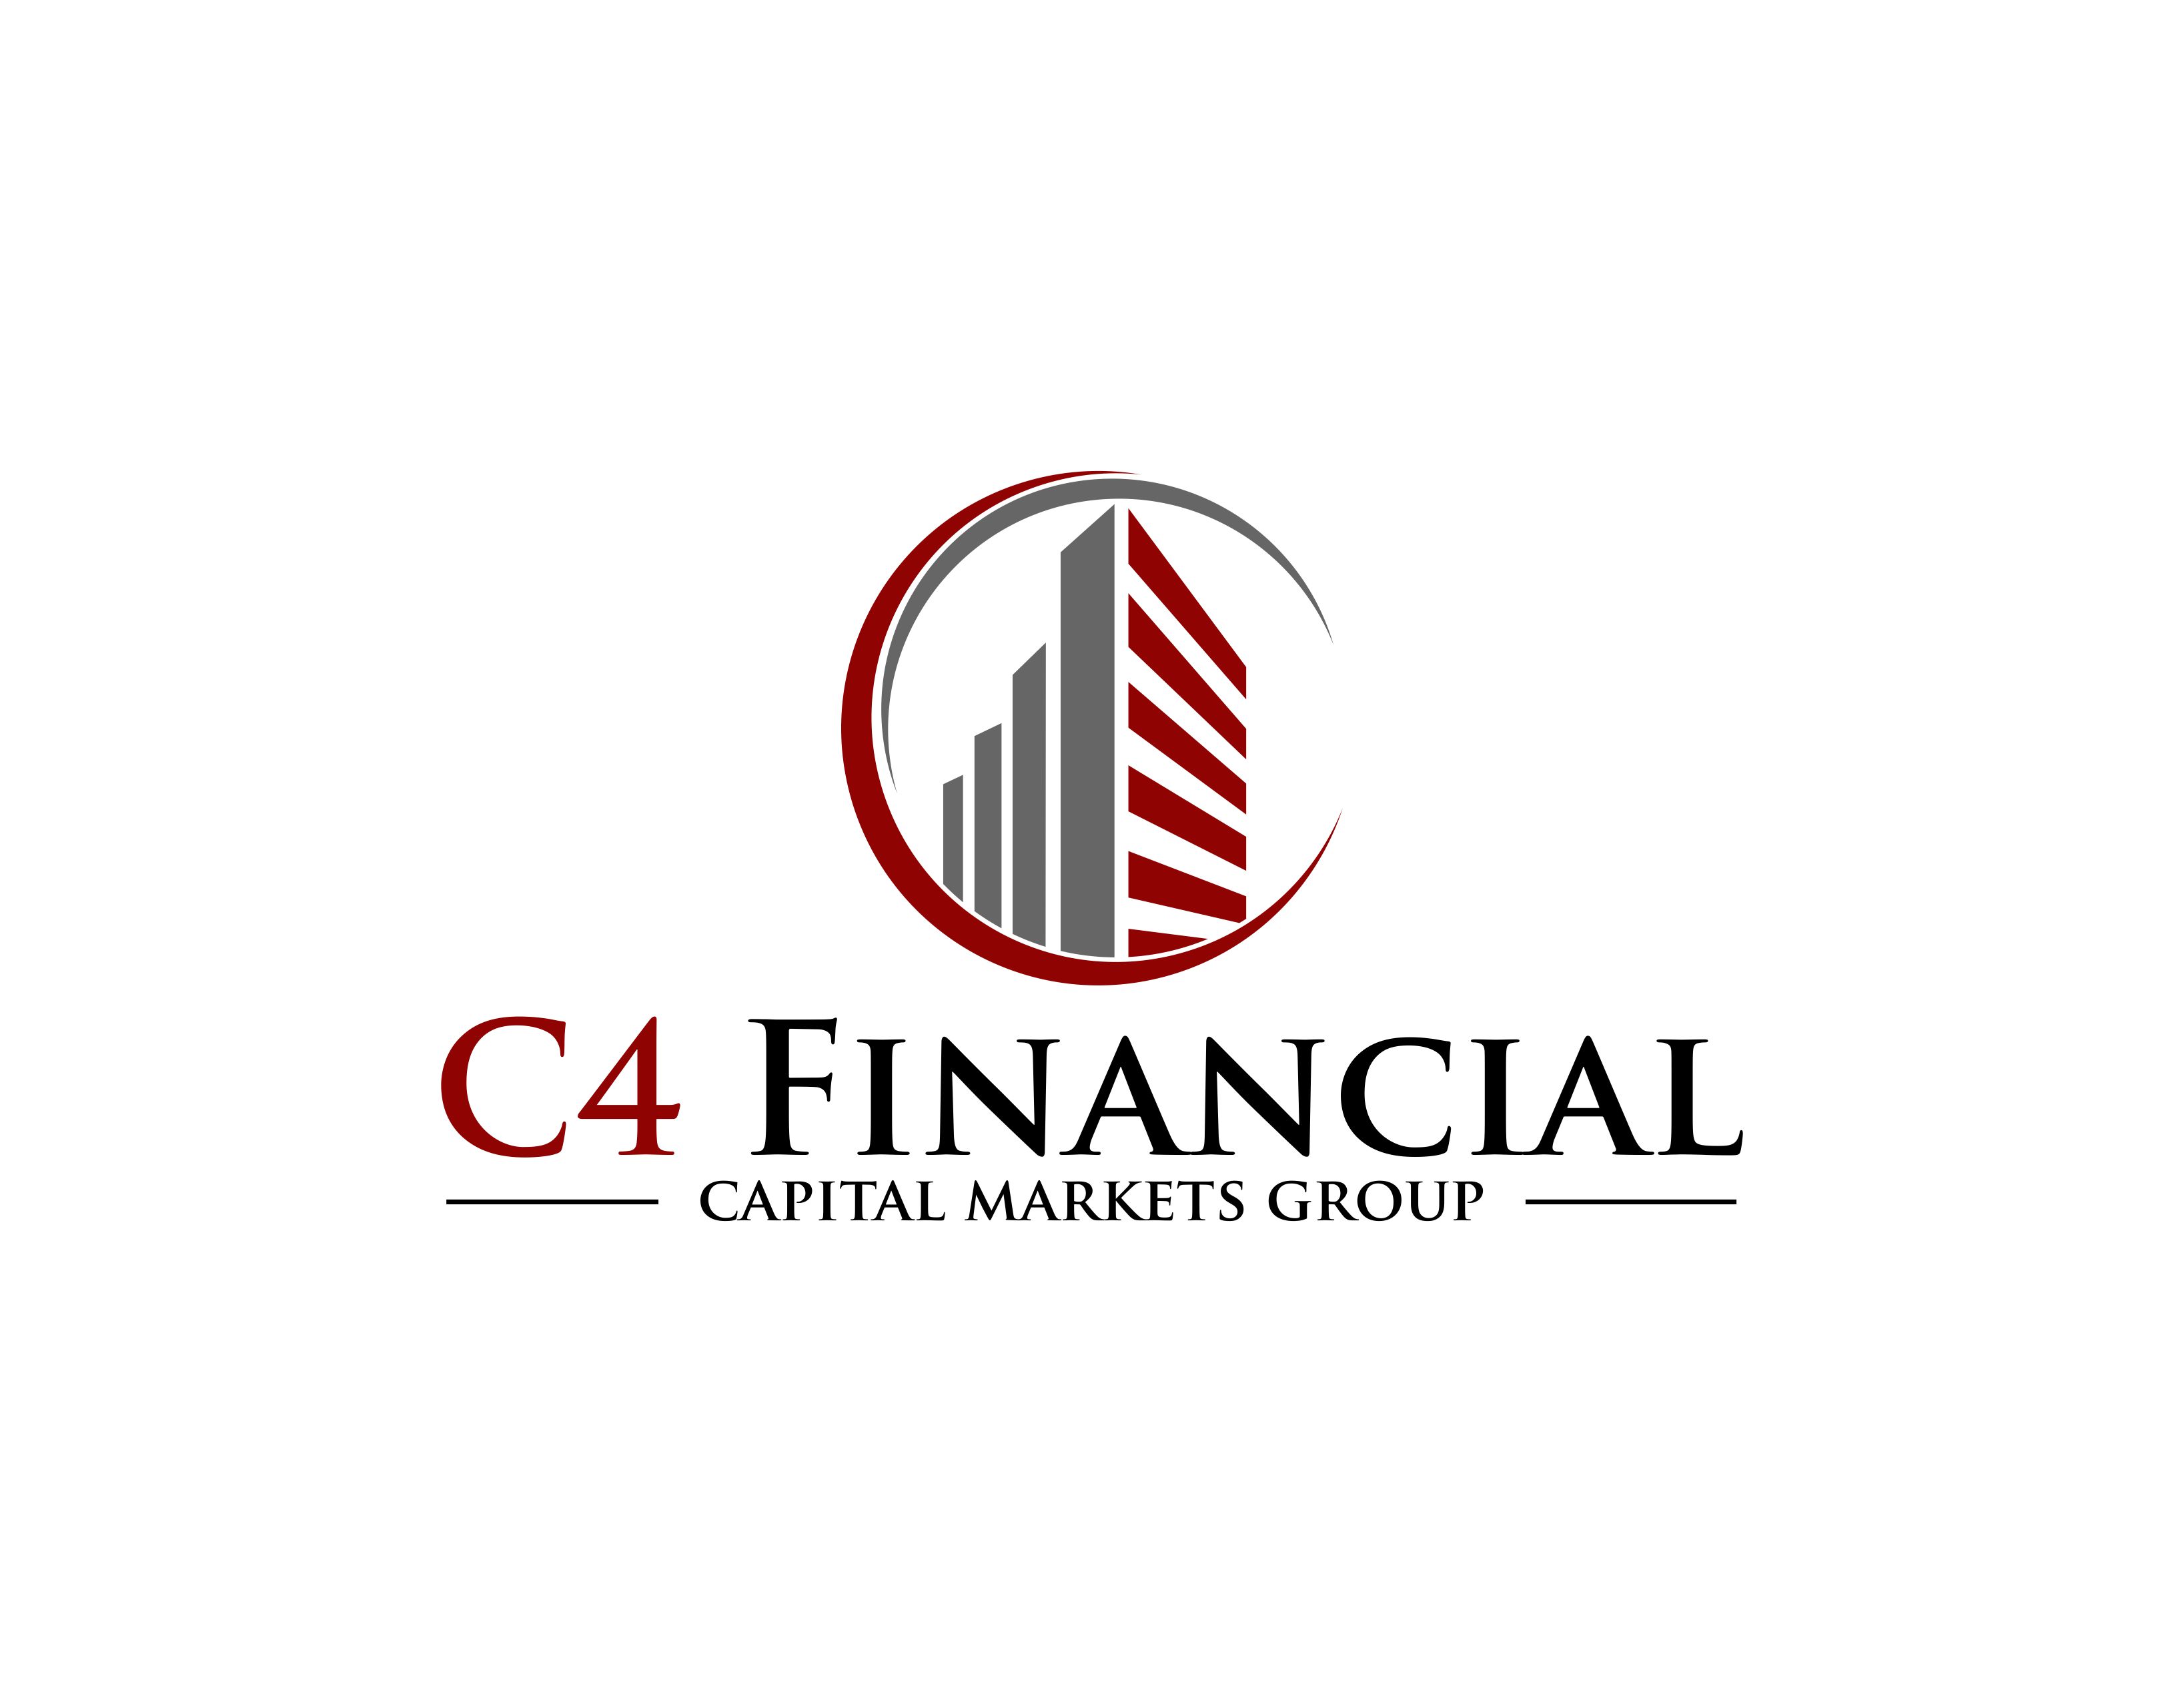 C4 Financial logo